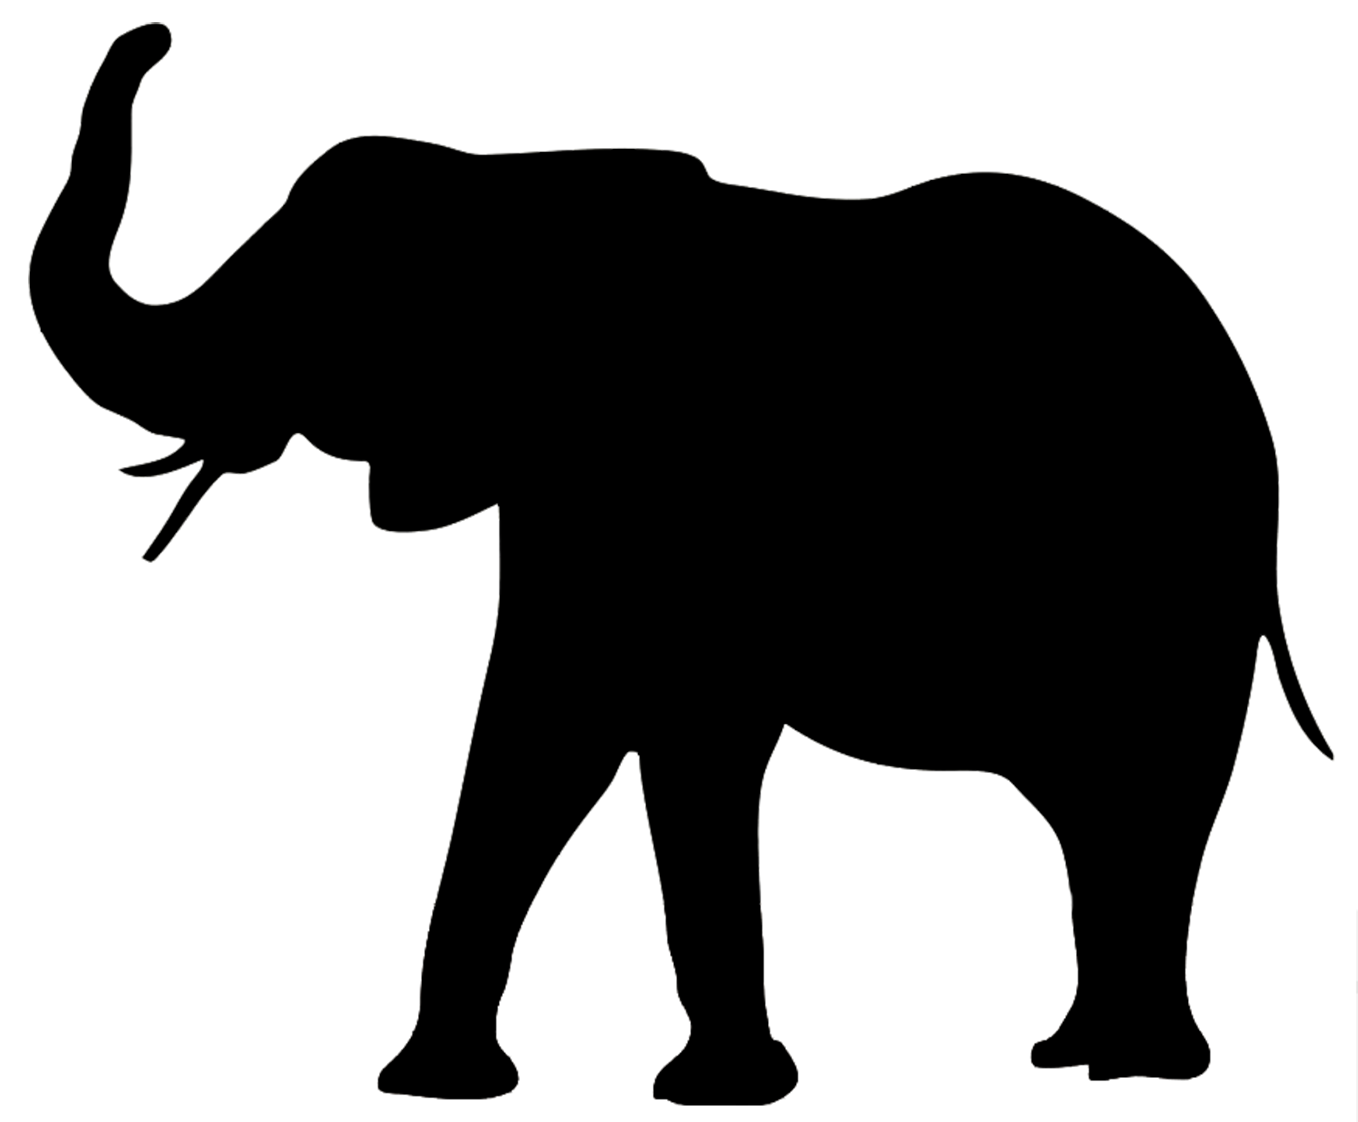 silhouette clip art of elepha